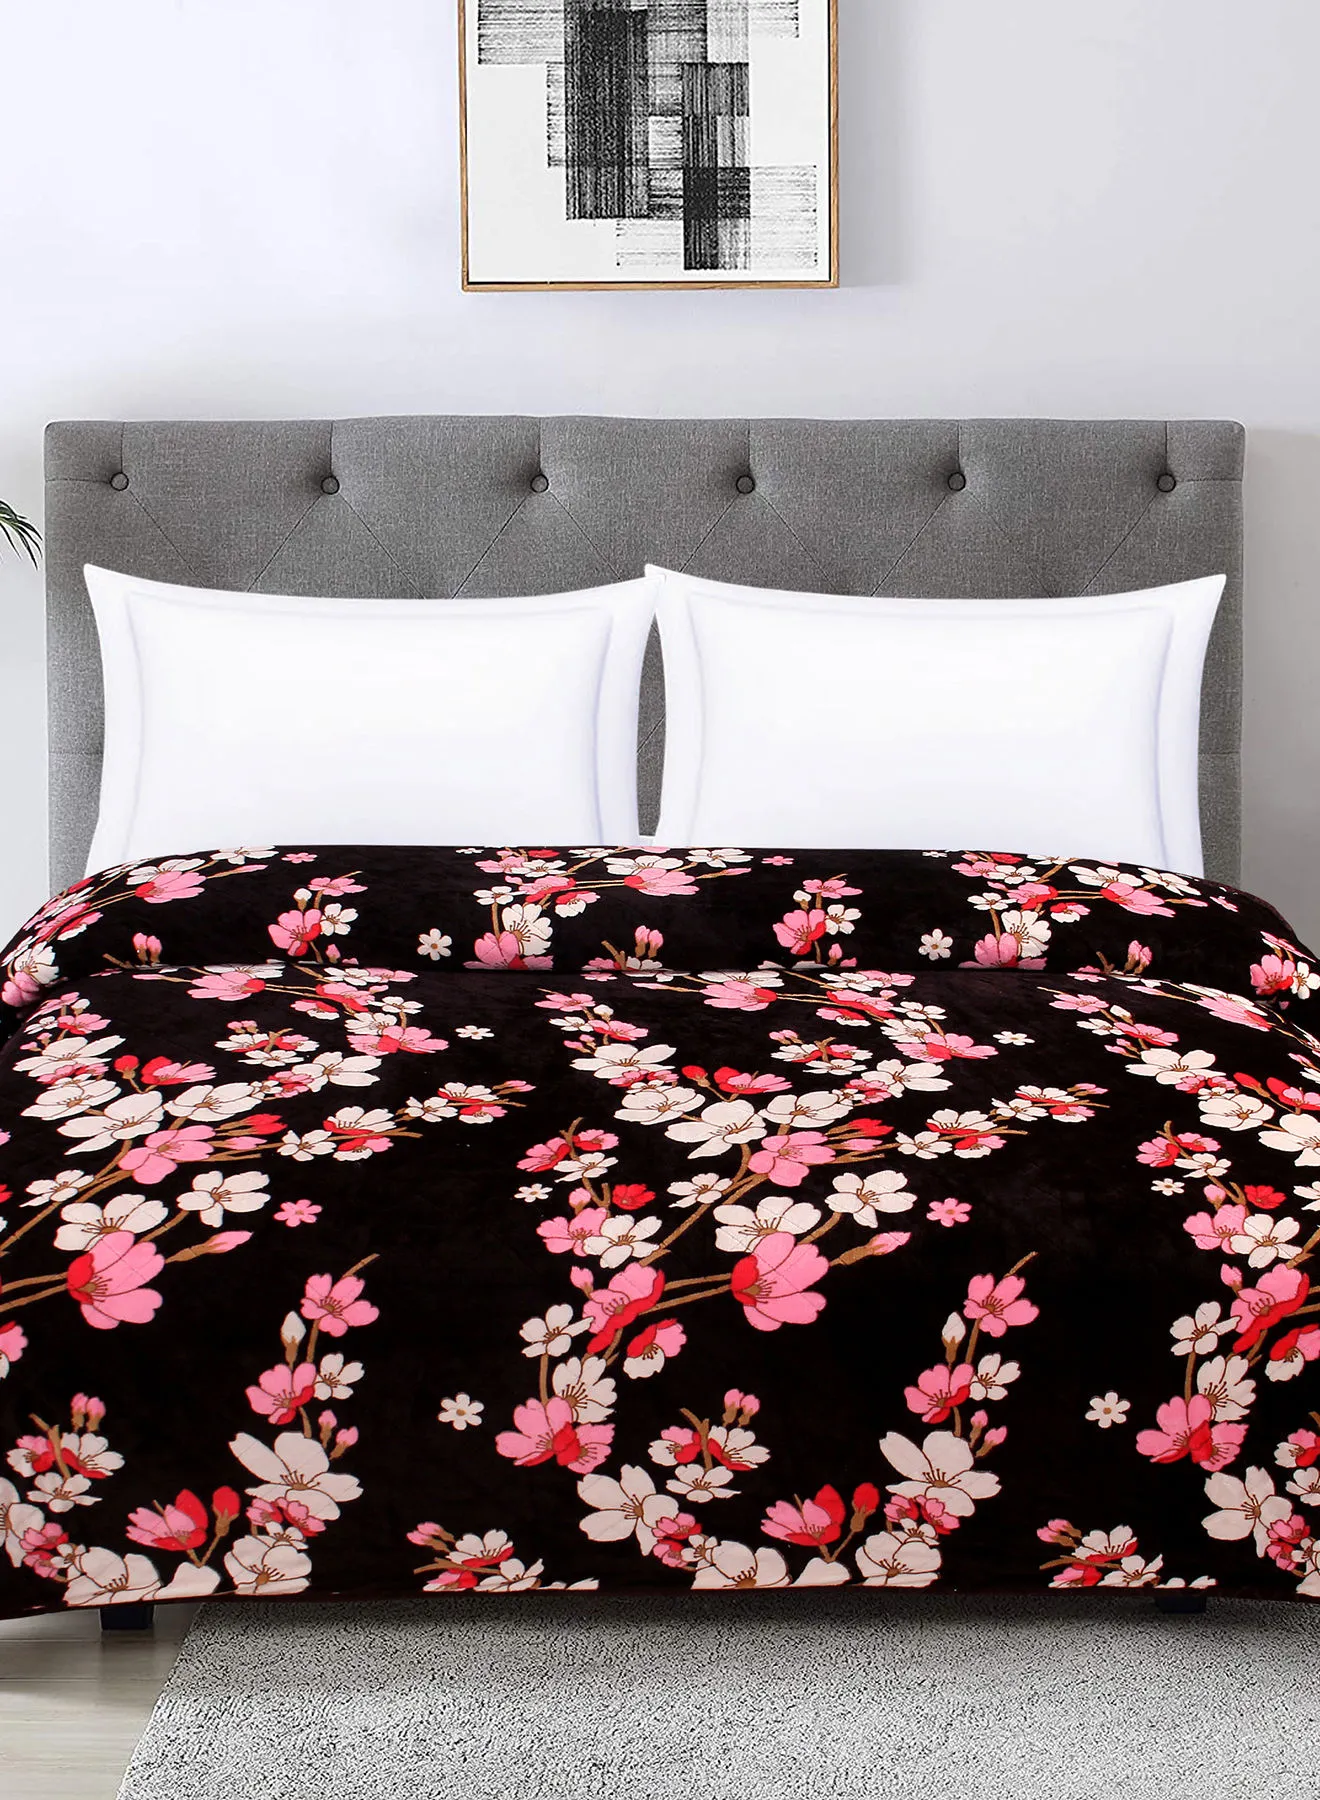 Hometown Light Blanket - 200X200 Cm - Floral Brown/Pink/Cream 100% Poyester Ultra Plush For Sofa Or Bedroom